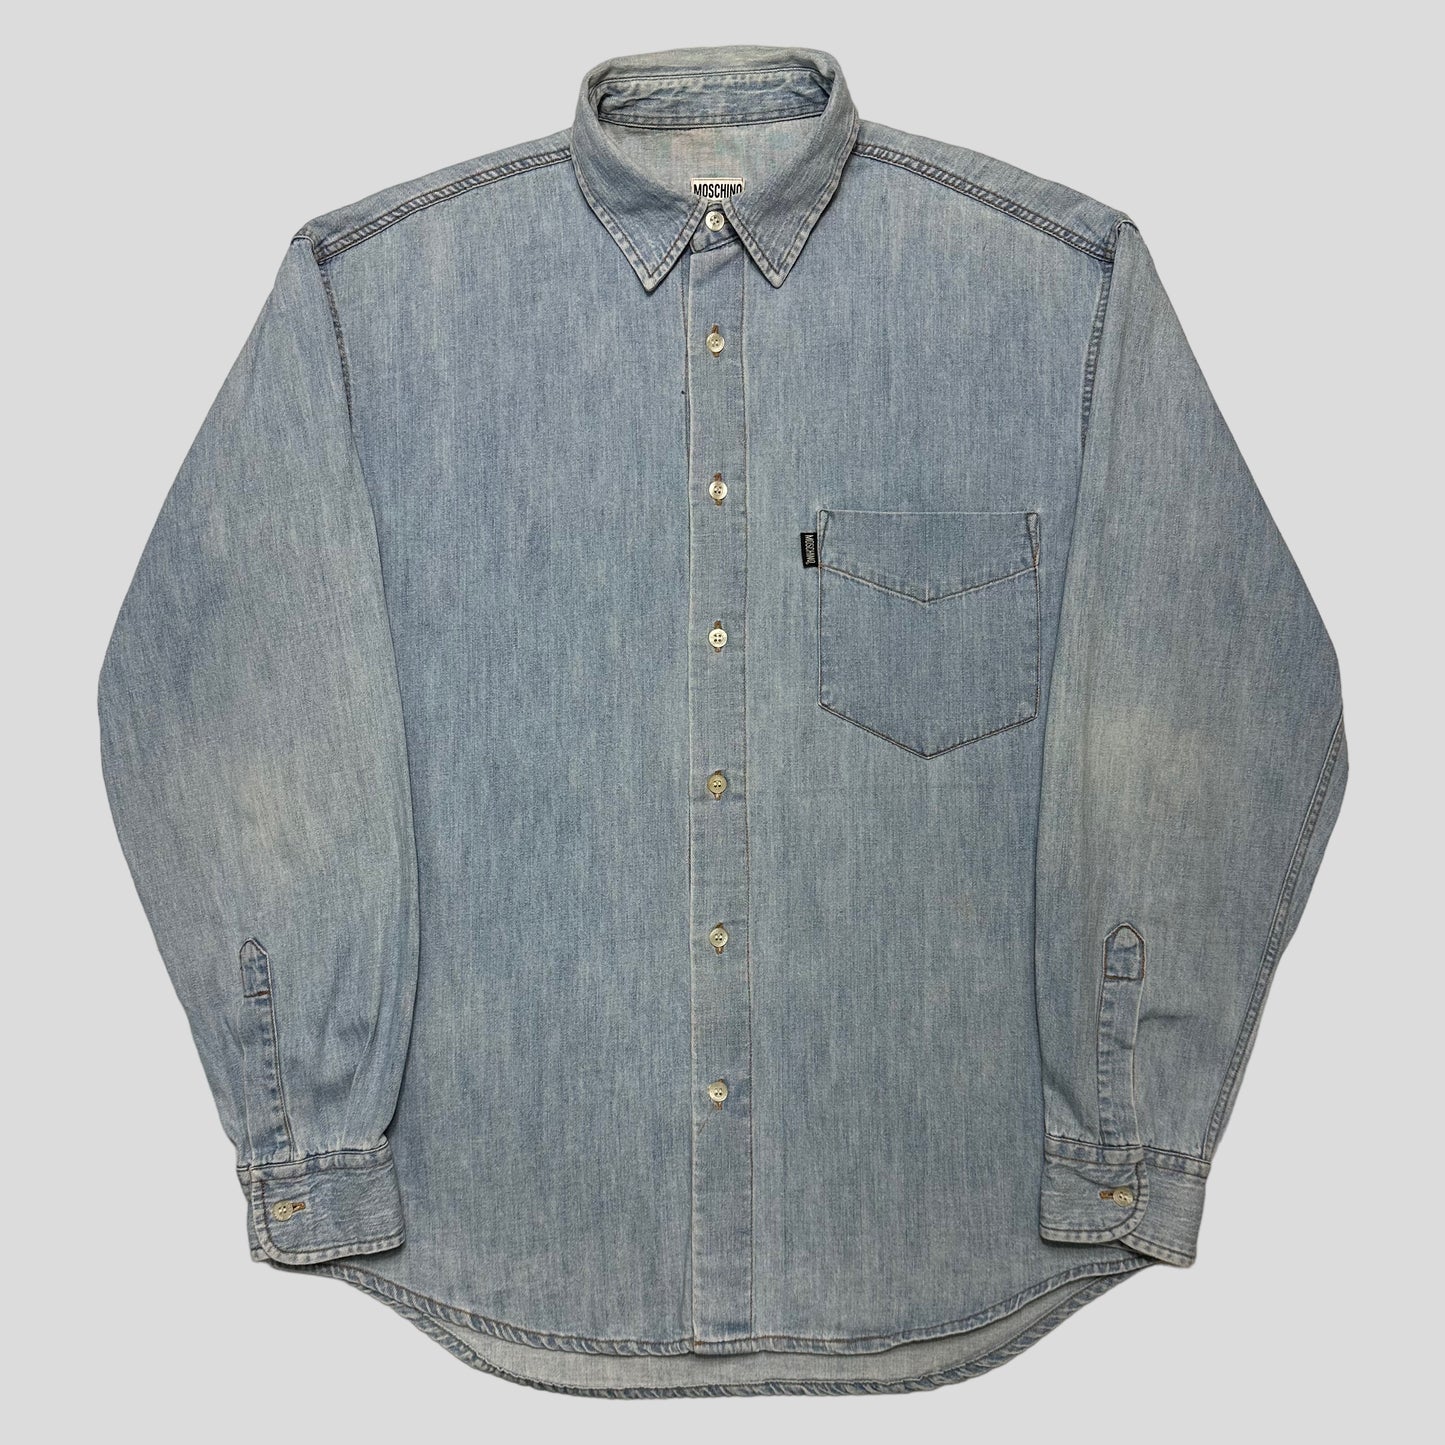 Moschino Jeans ‘94 “denim” shirt - L